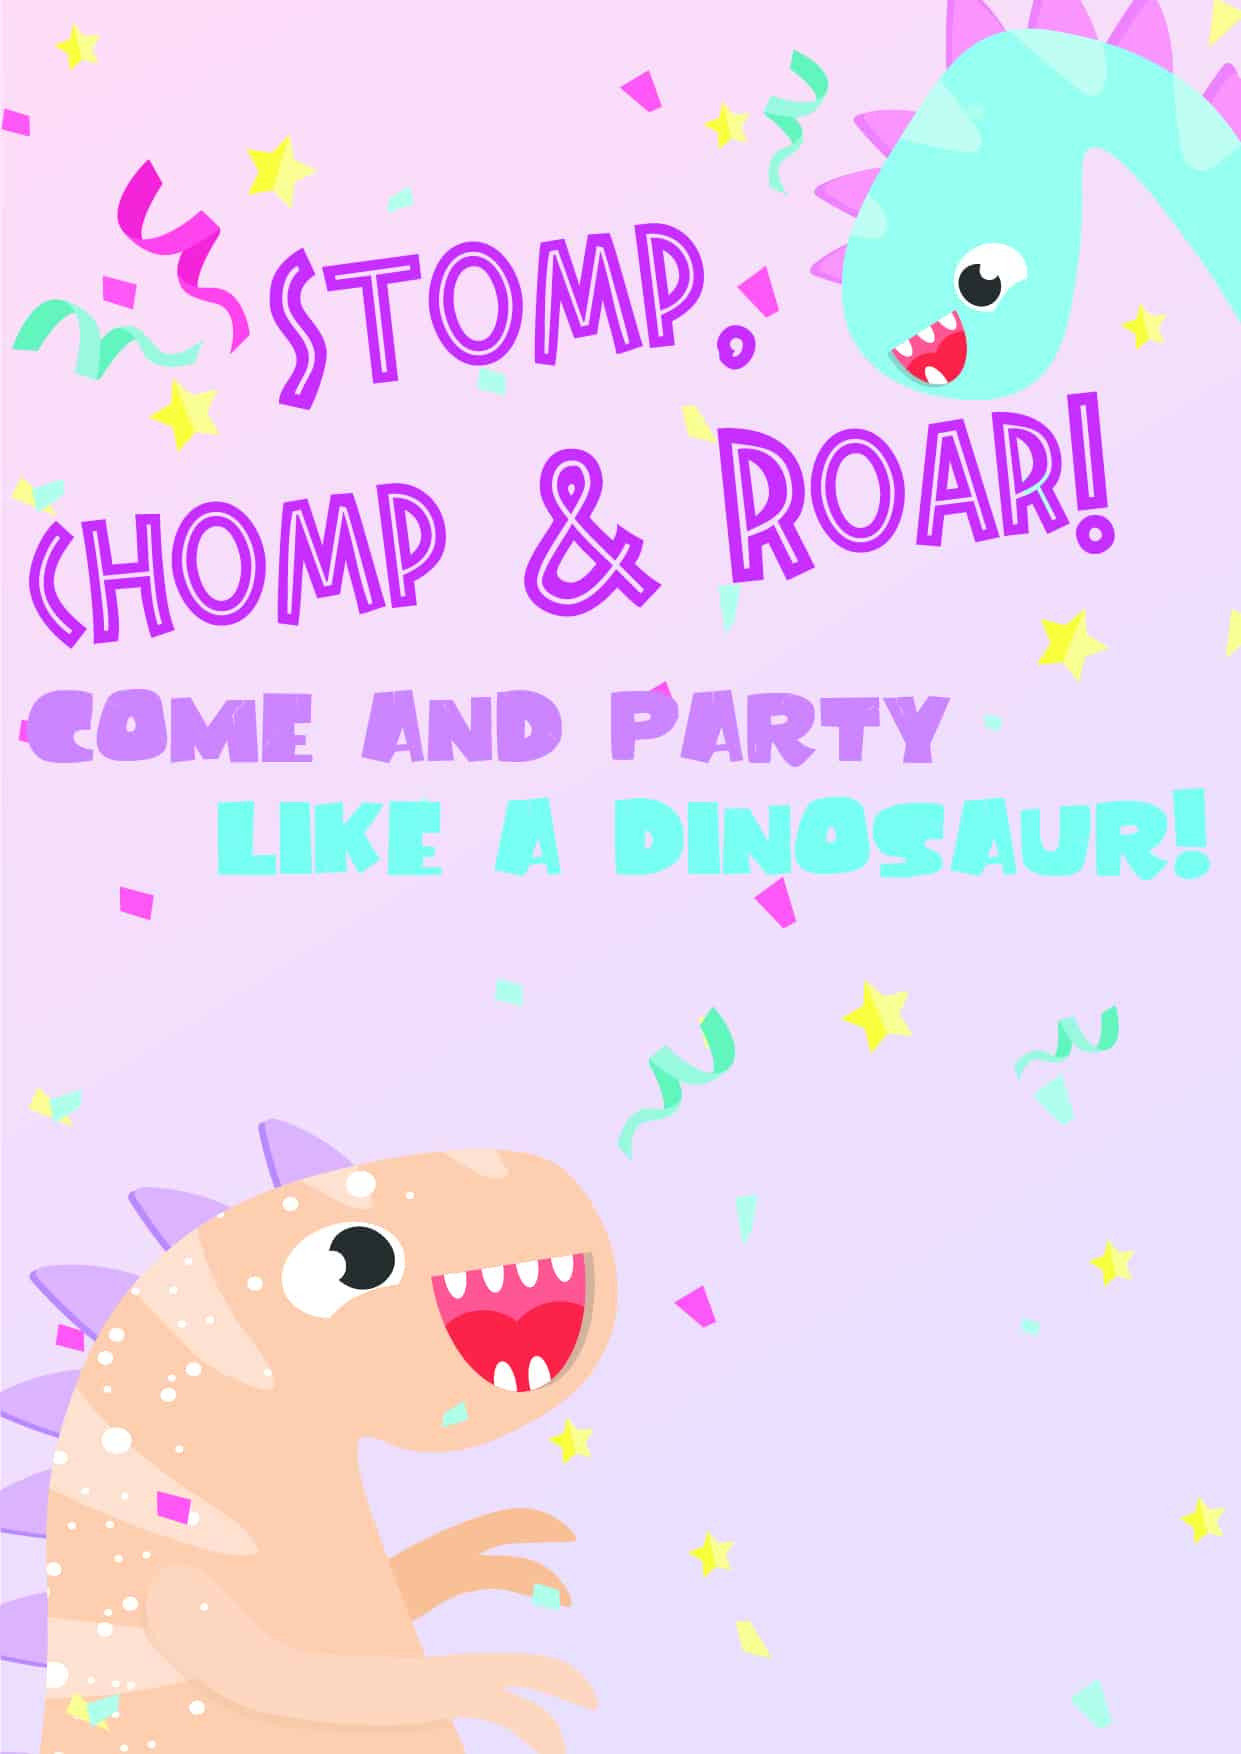 Free Printable Dinosaur Birthday Invitations
 Dinosaur Birthday Invitations Free Printable Party